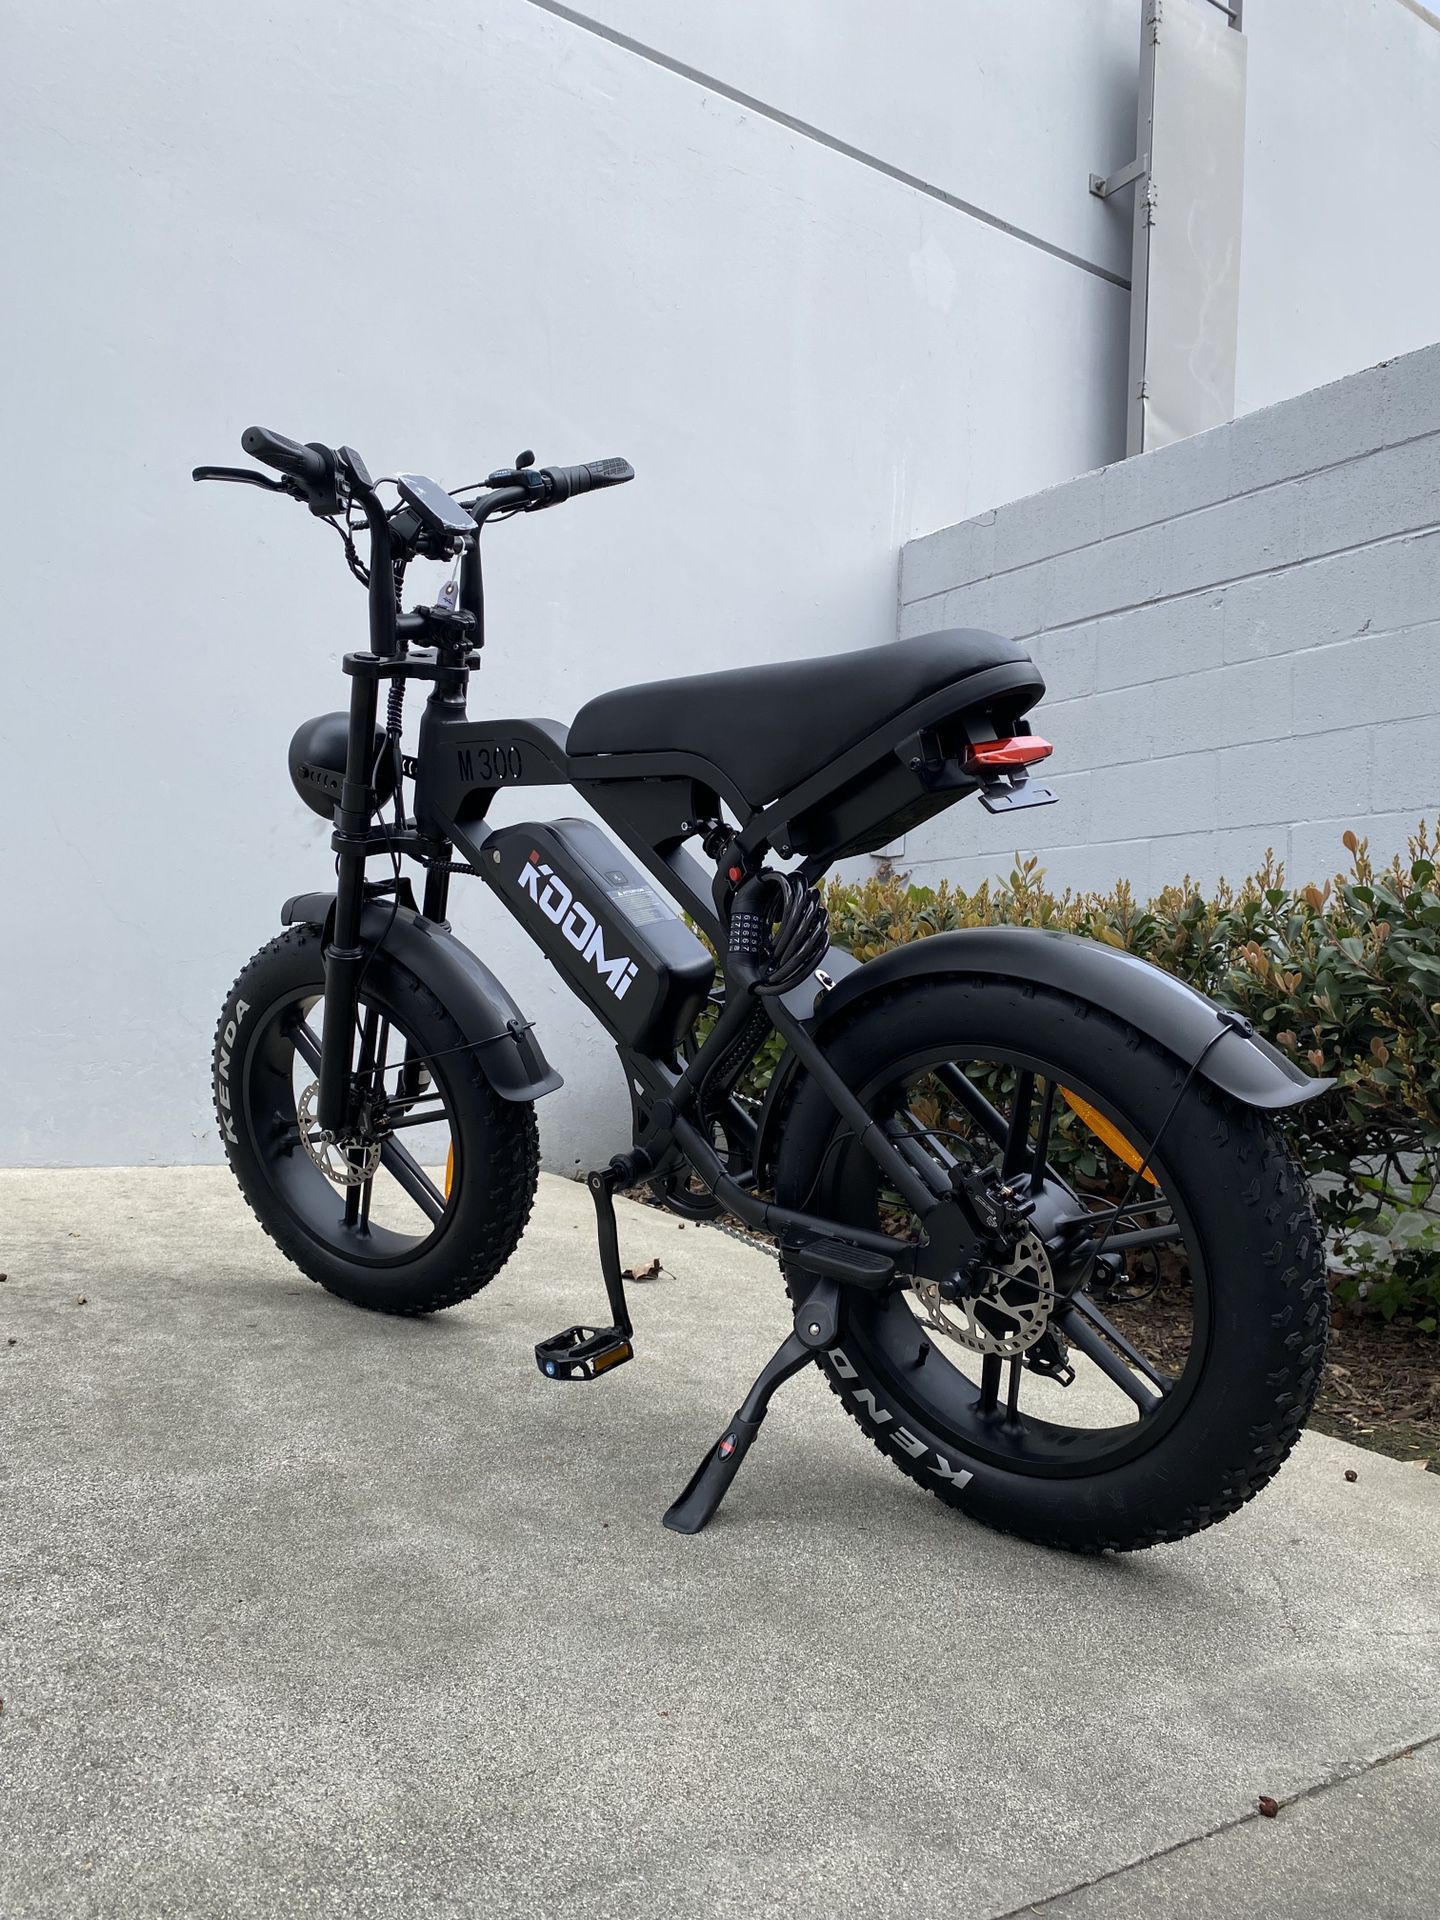 New, retro moped e-bike 750w 48v 20ah top speed 28mph hydraulic disc brakes range up to 65 miles electric bike 